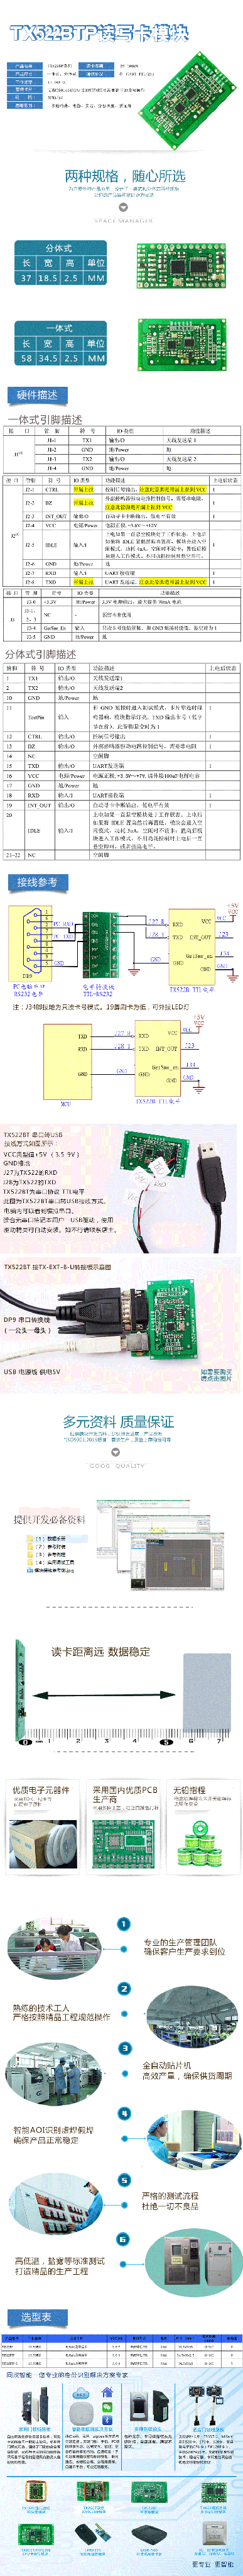 TX522BTP--淘宝详情.png